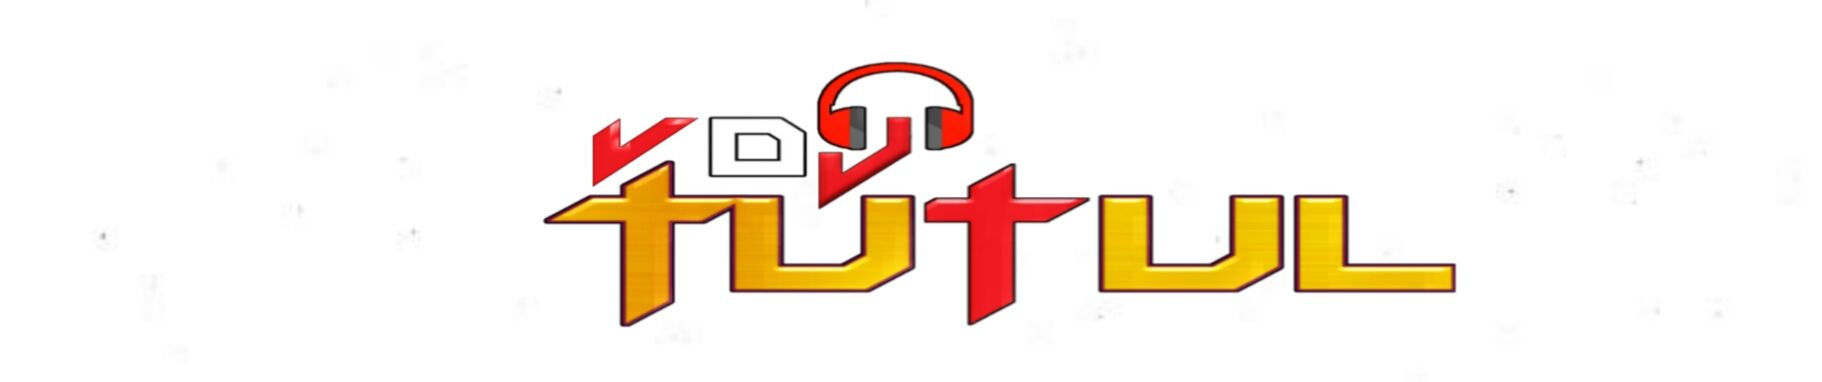 hetalia logo transparent